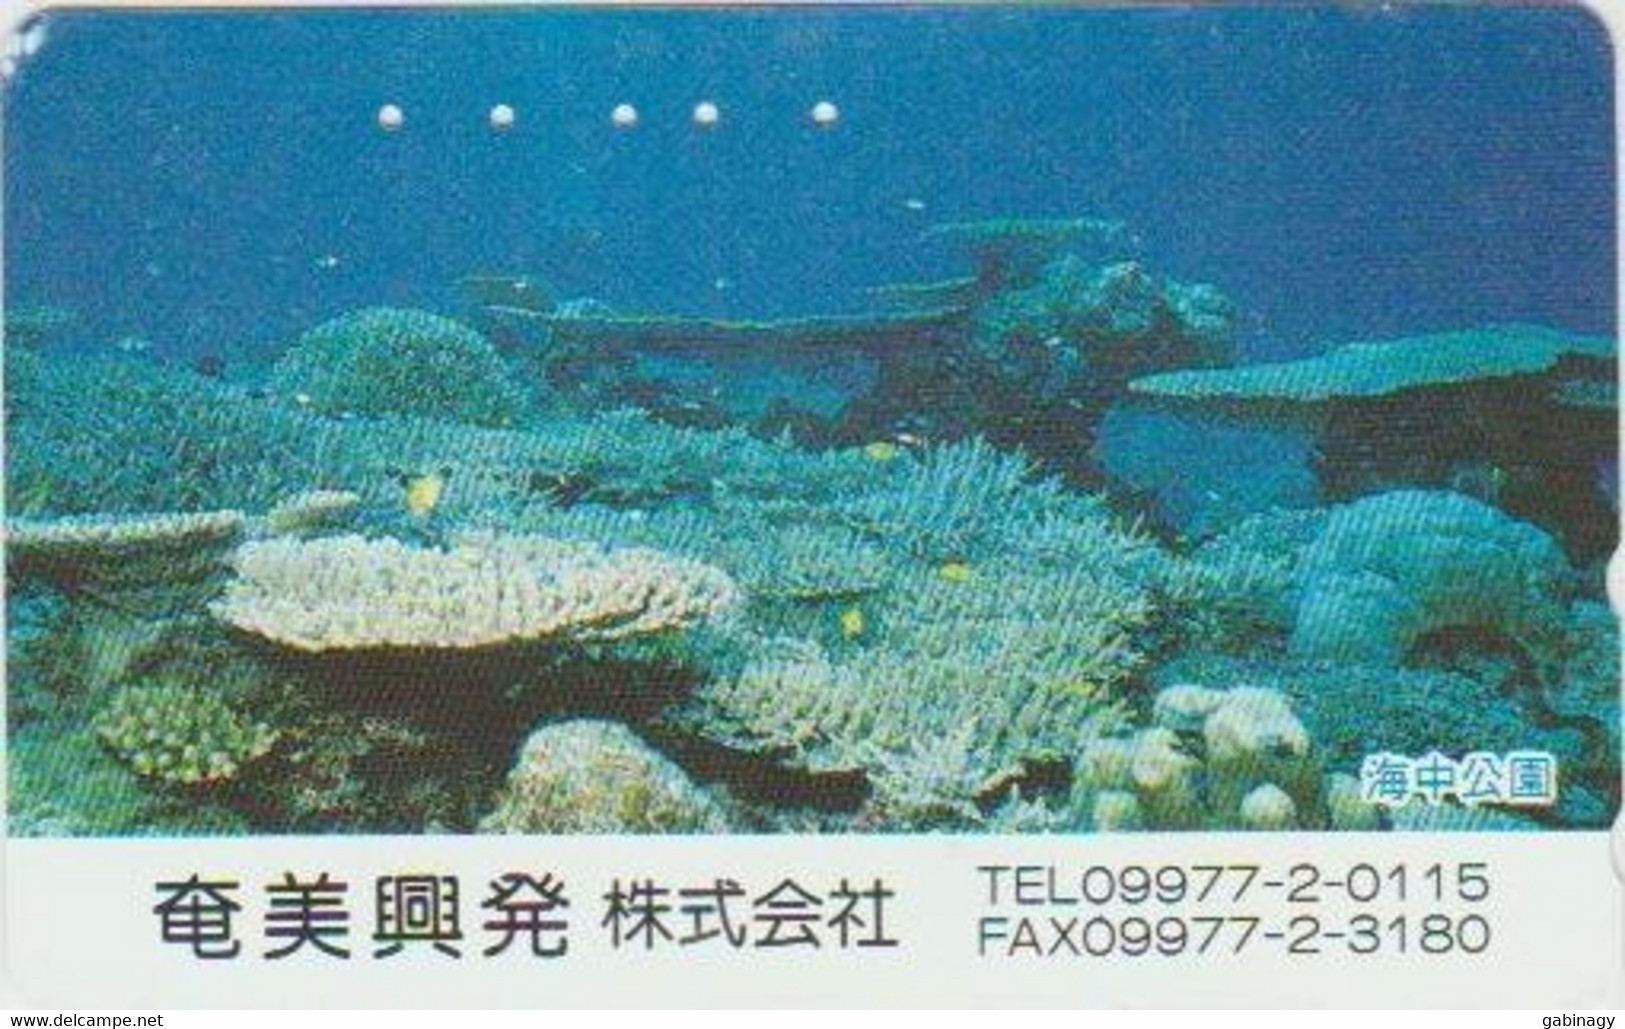 UNDERWATER LIFE - JAPAN-002 - 110-011 - Fish